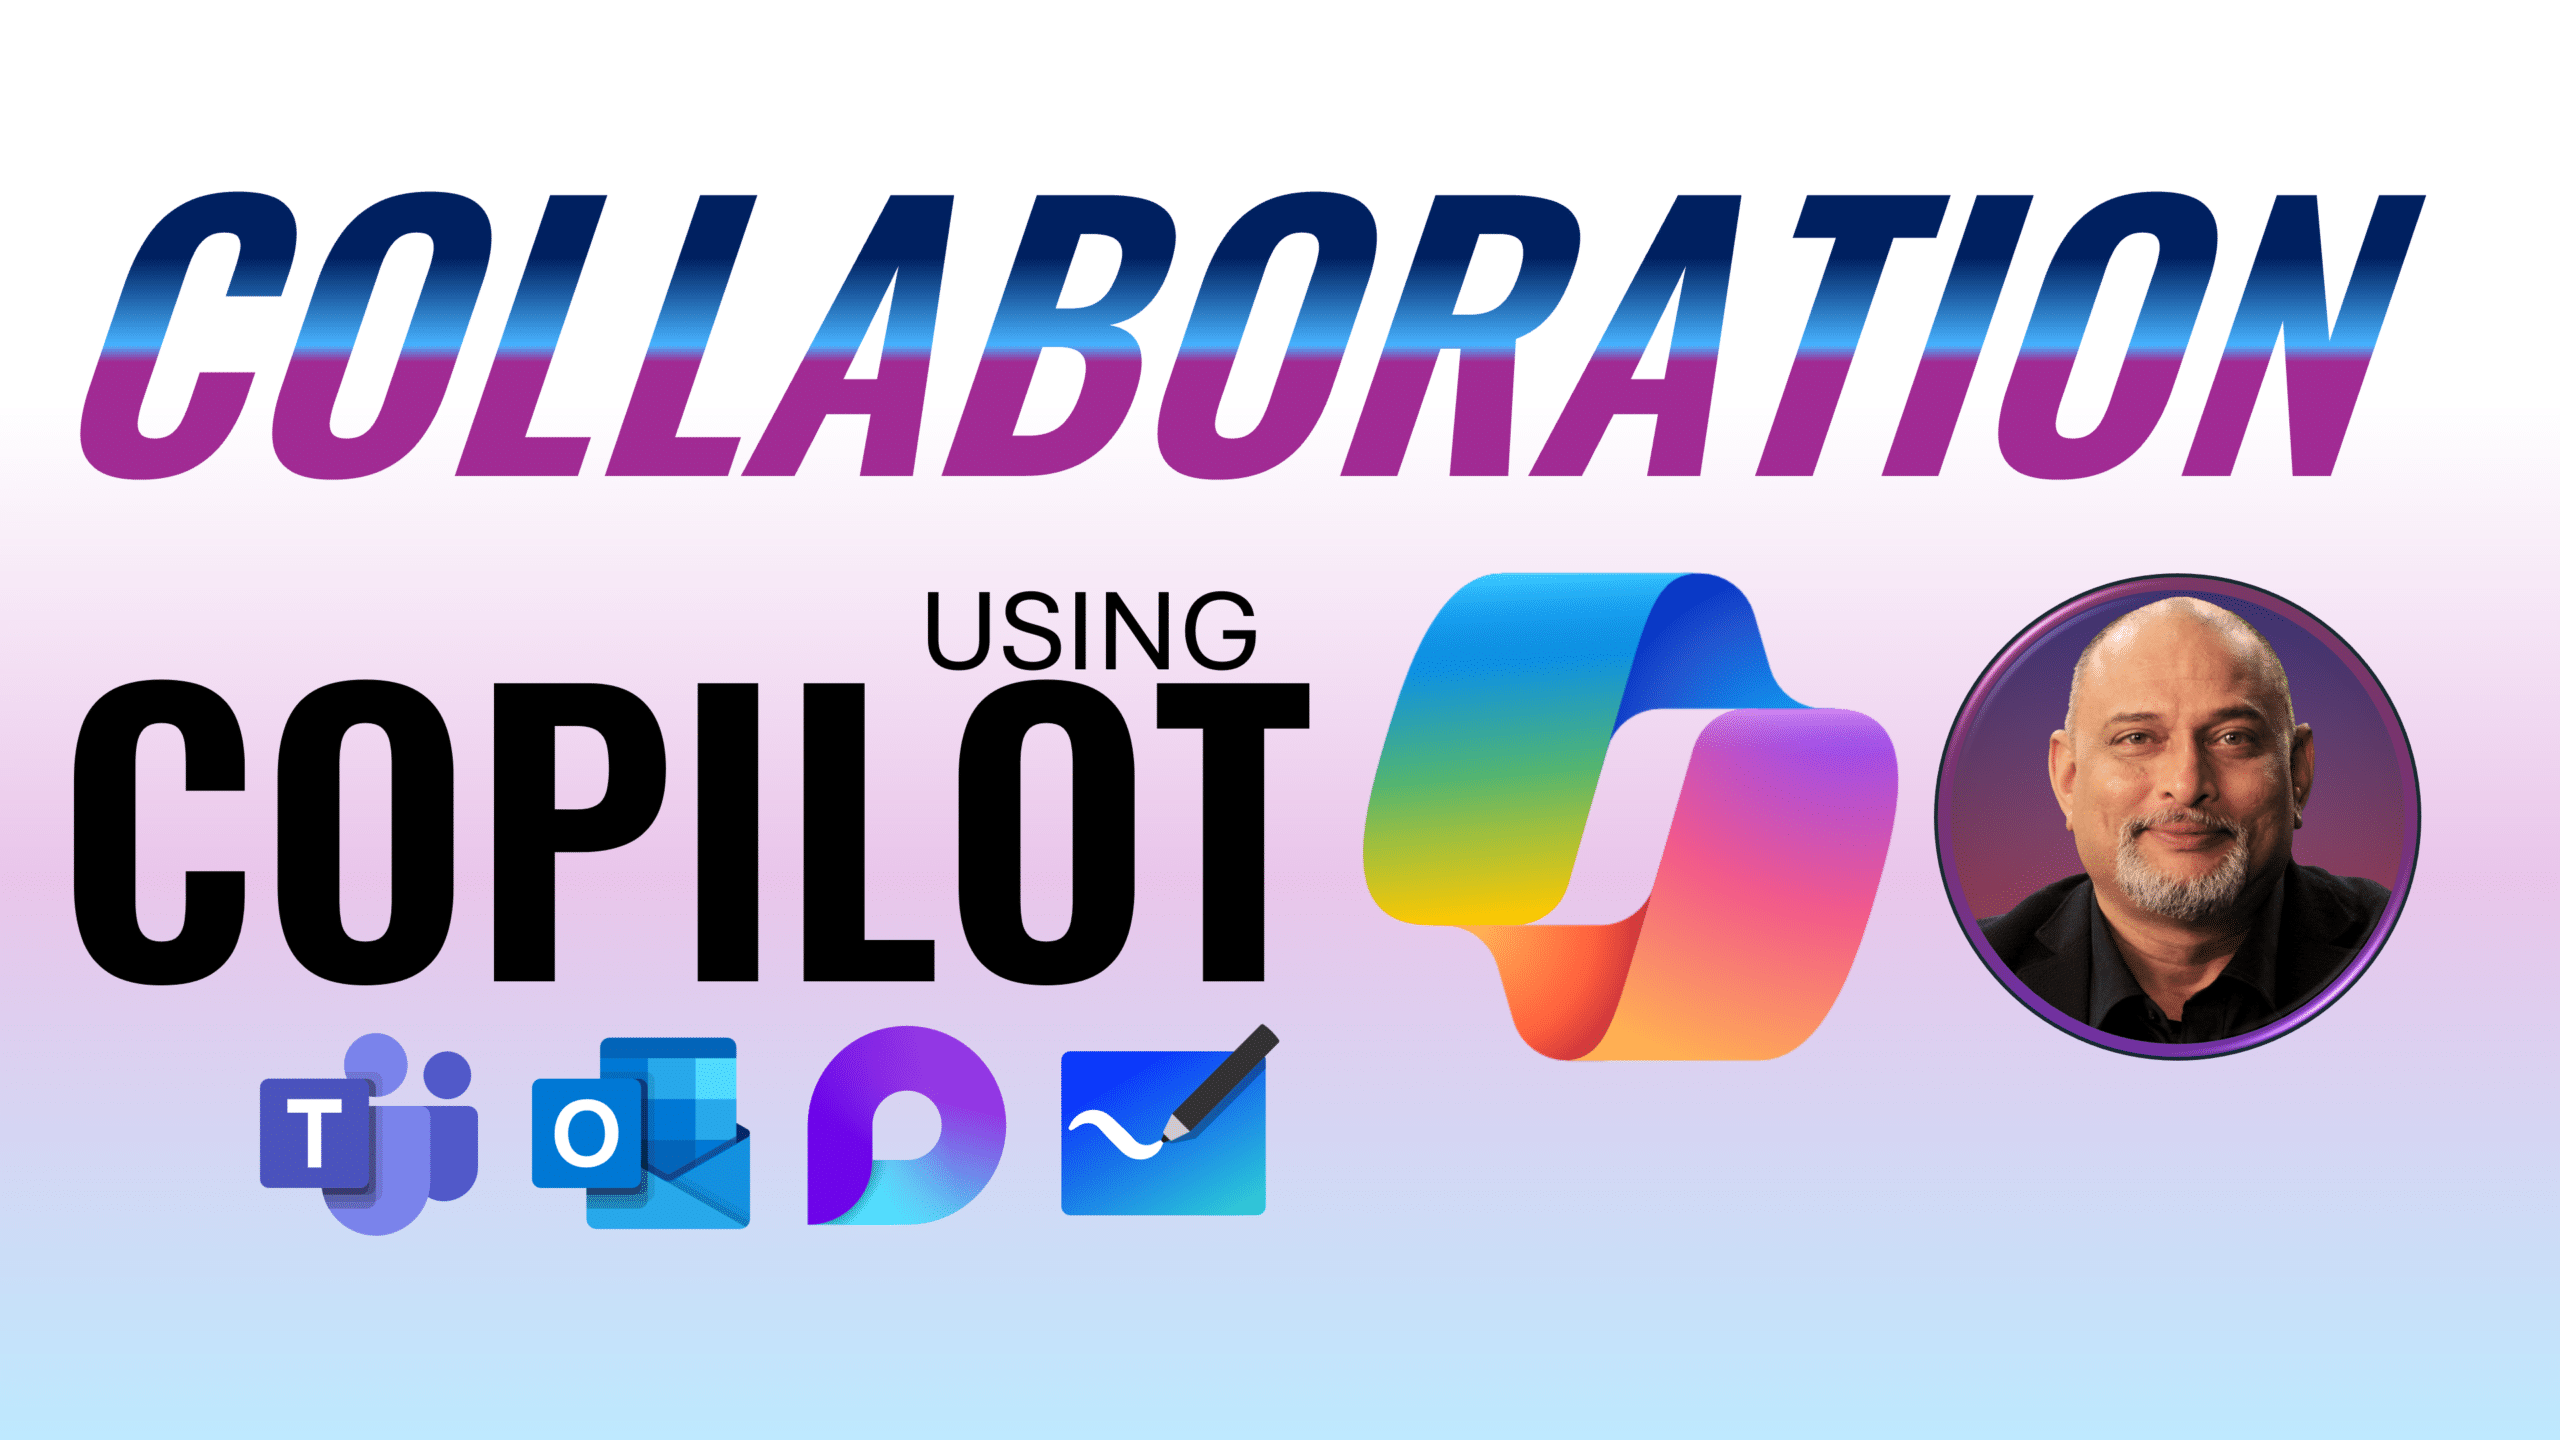 Transform Collaboration using Copilot